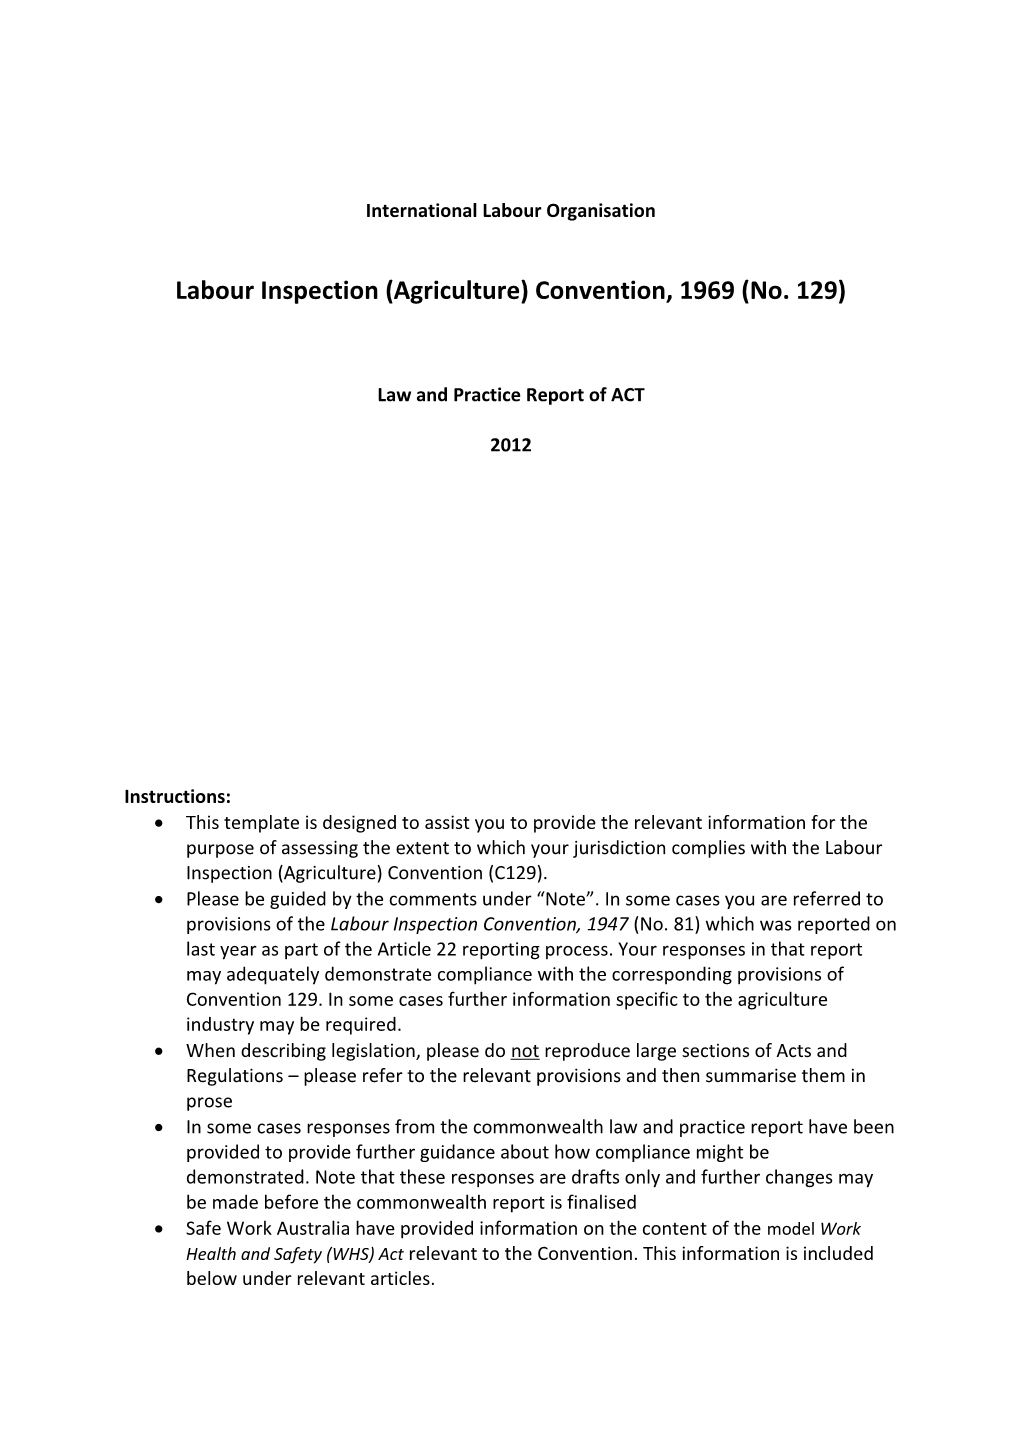 Labour Inspection (Agriculture) Convention, 1969 (No. 129)